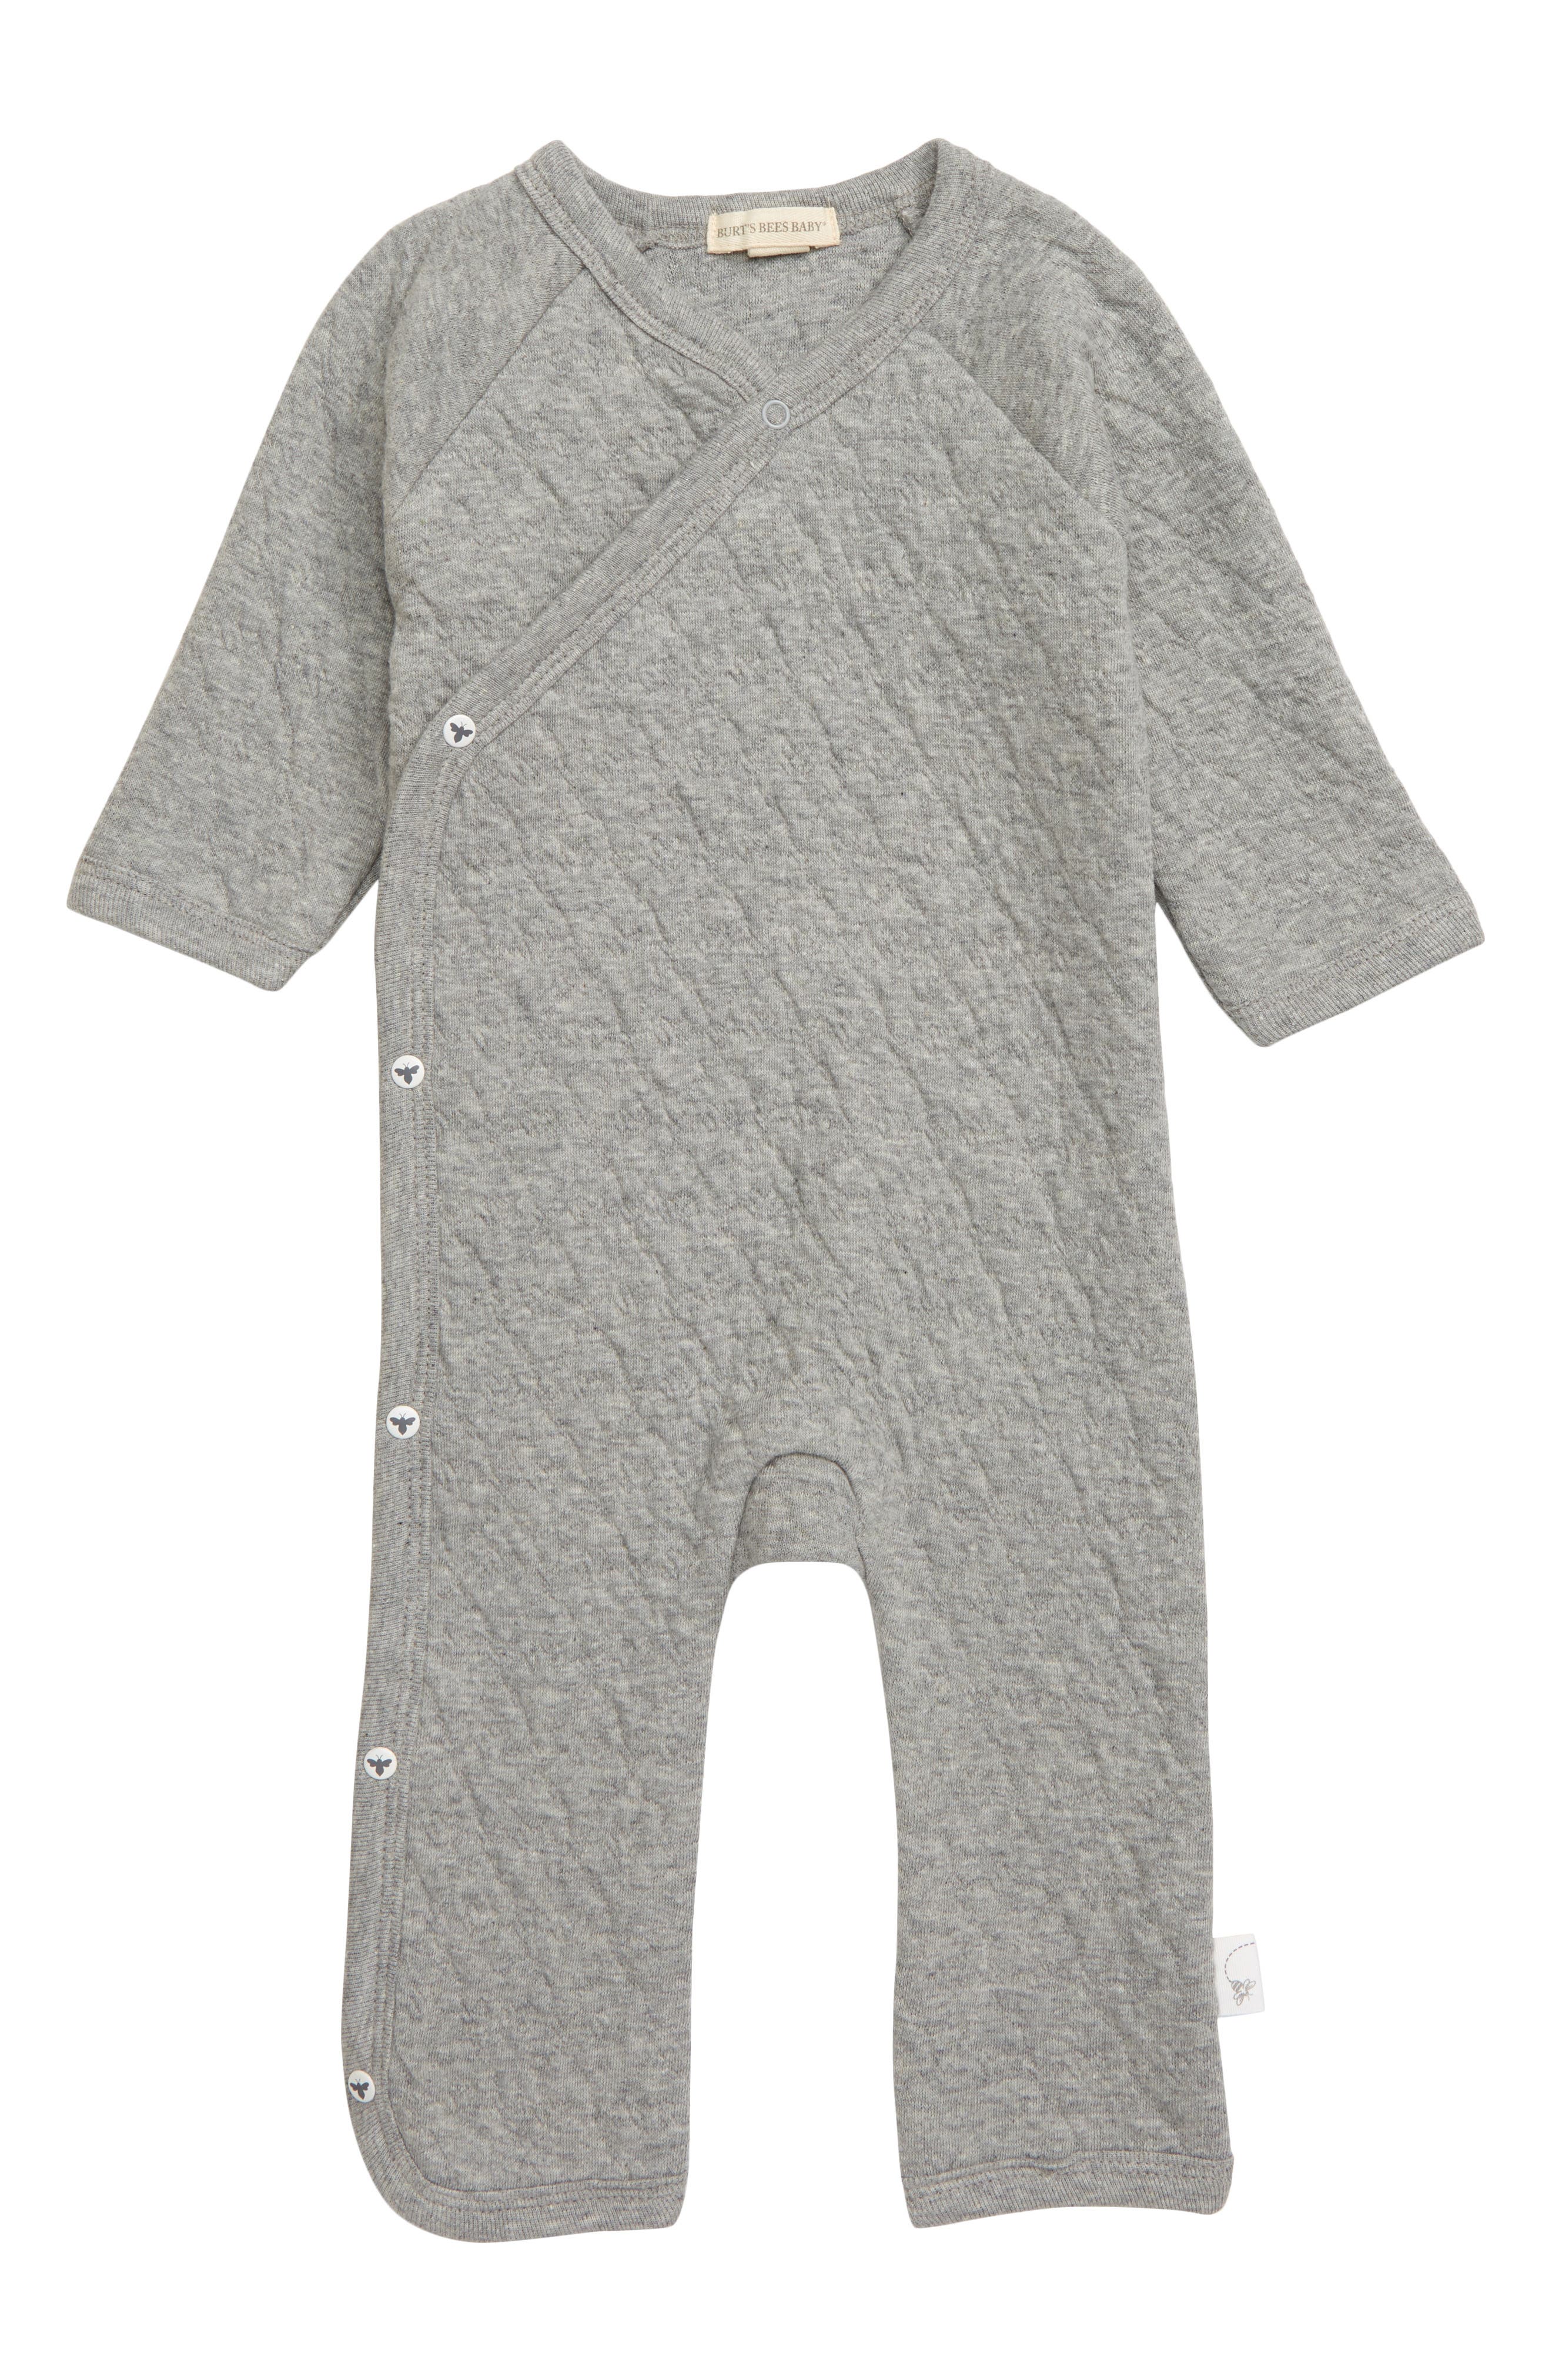 Burt's Bees Unisex-Baby Pants Set of 2 Lightweight Knit Infant Bottoms 100% Organic Cotton